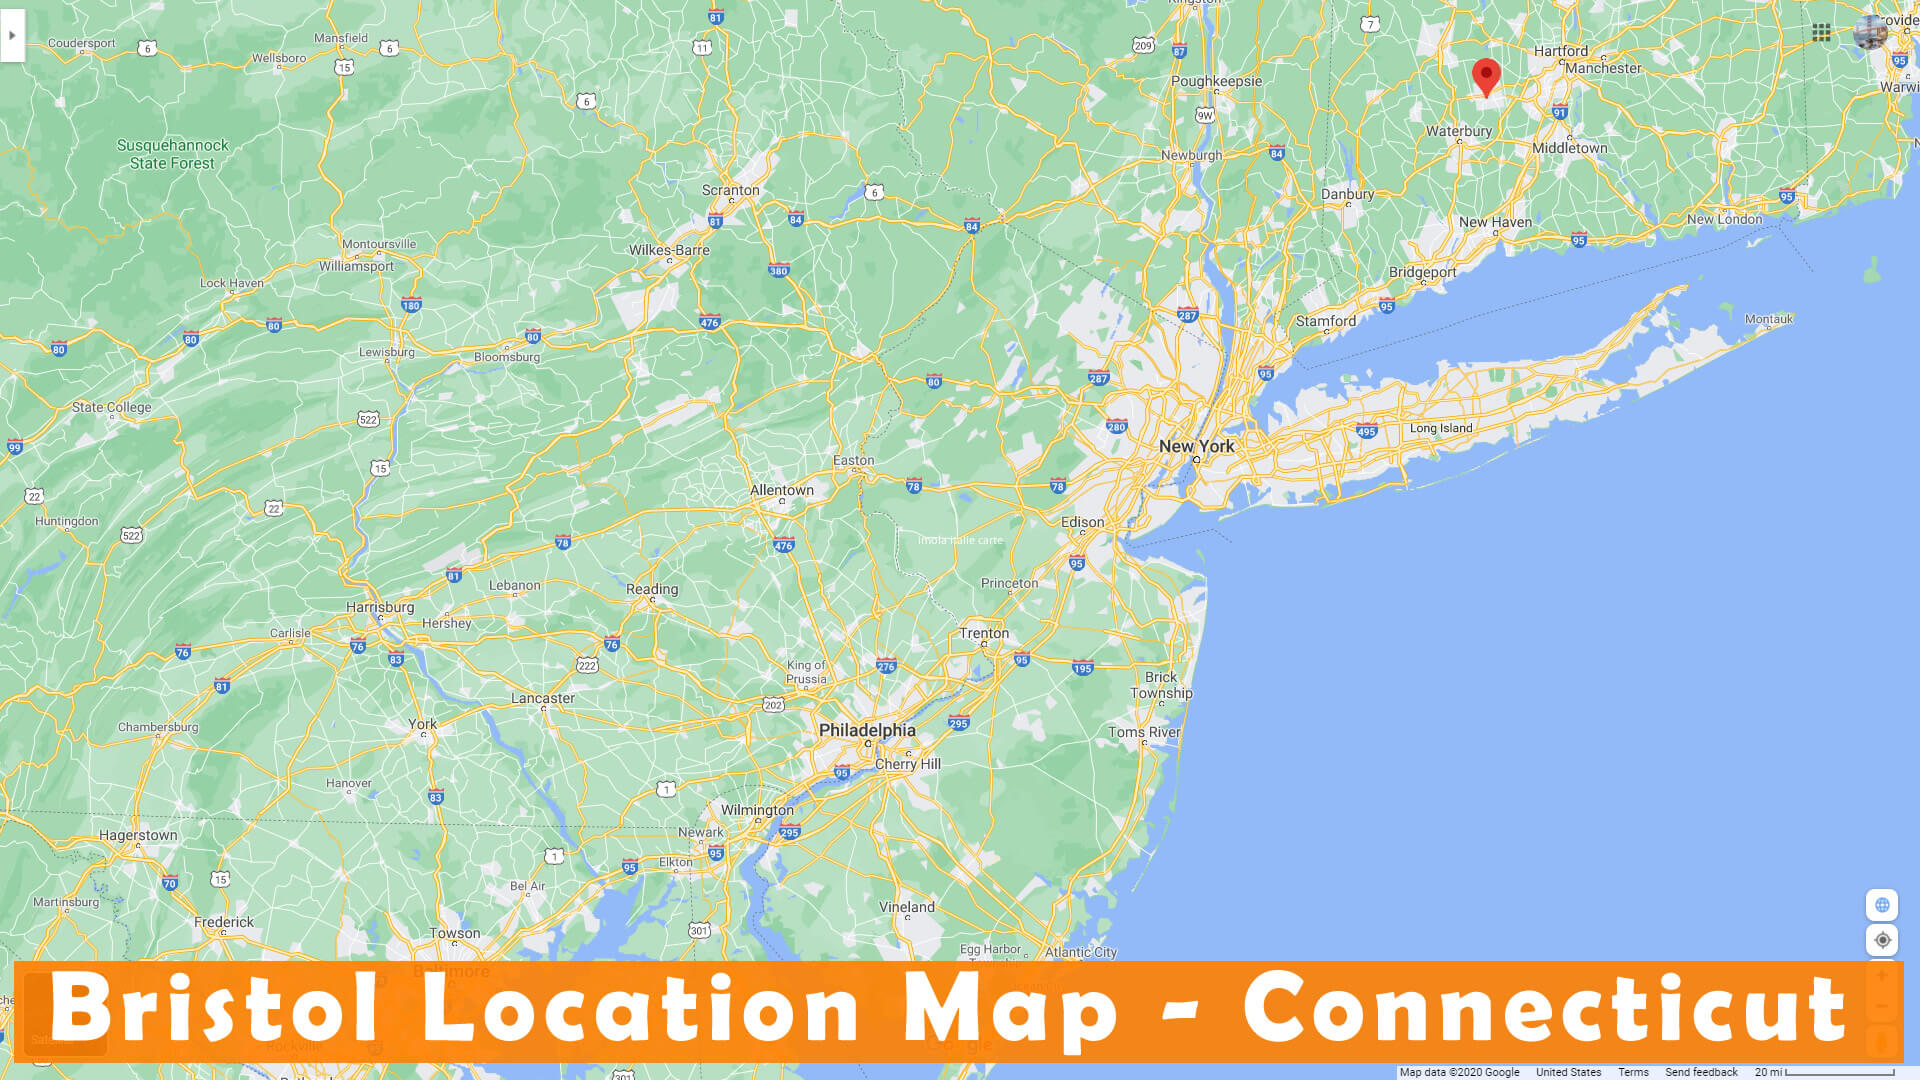 Bristol Location Map Connecticut